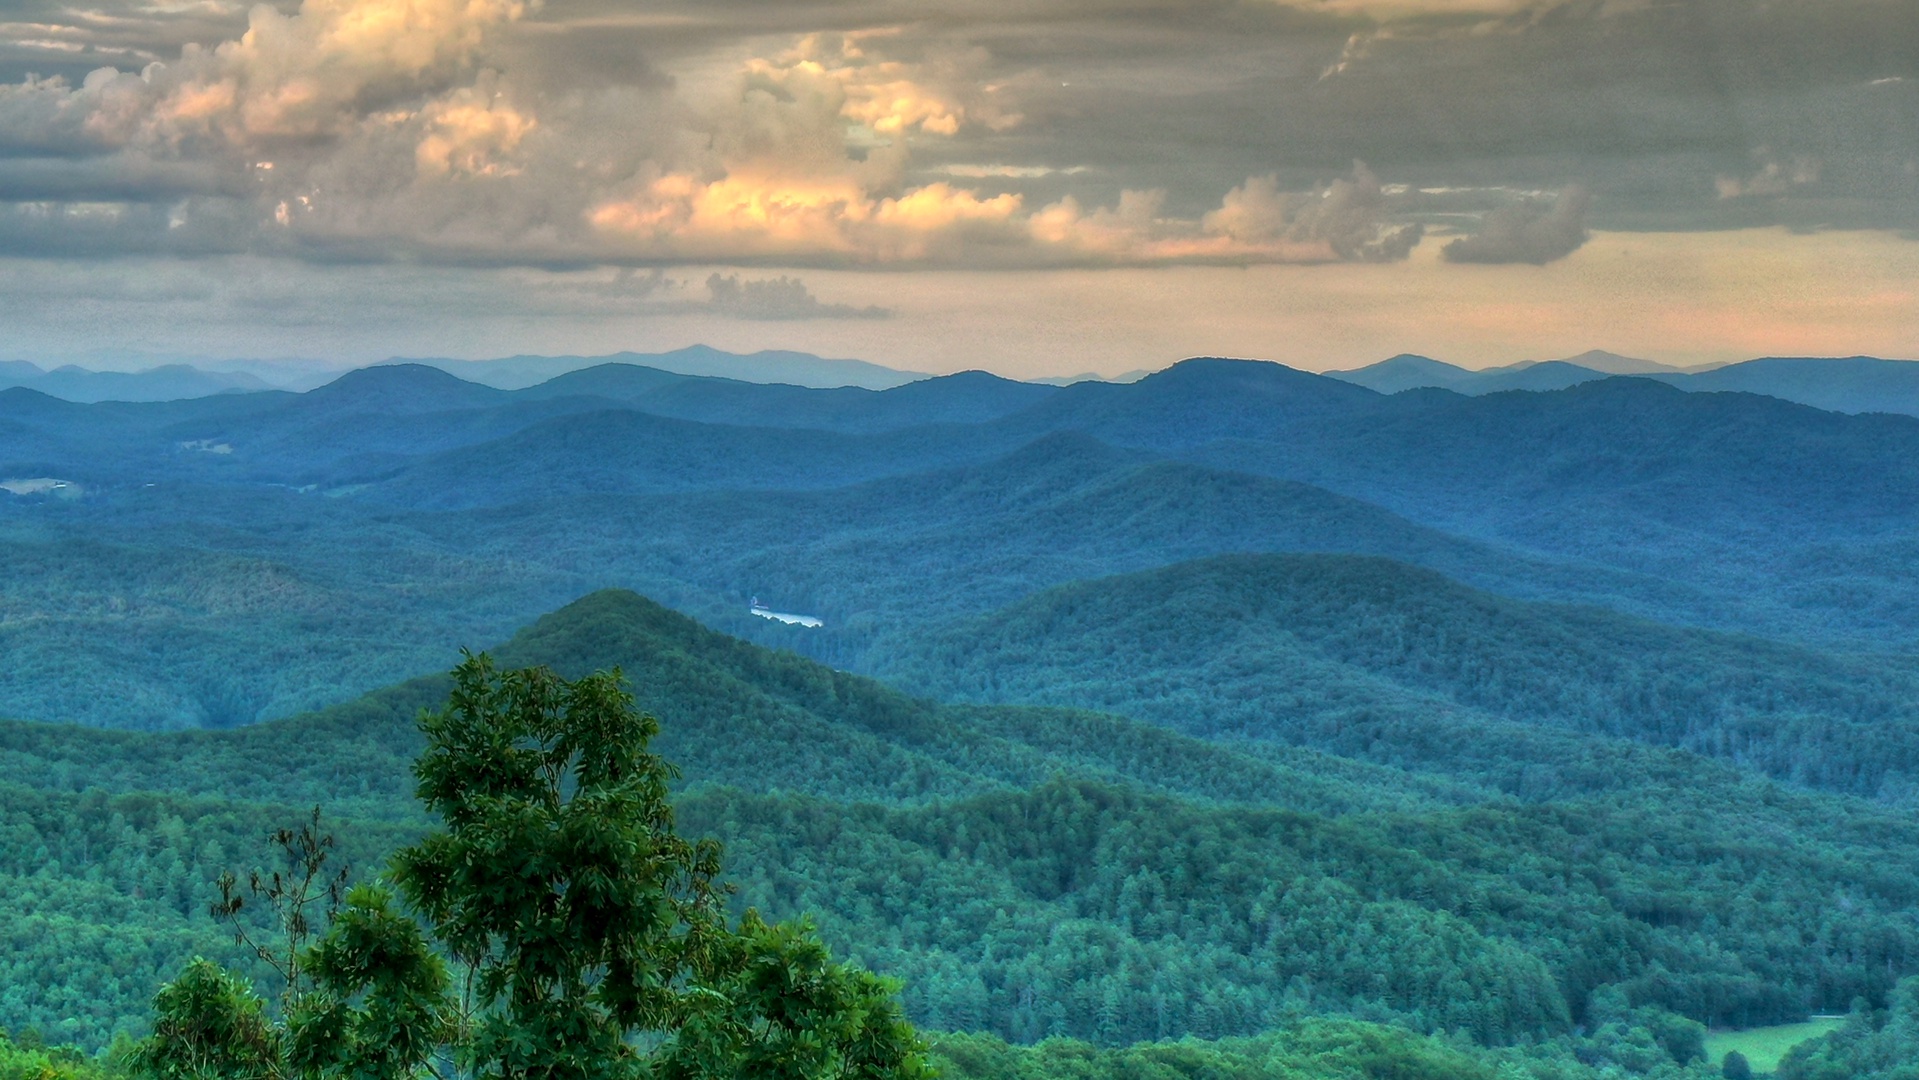 Heavenly Day - Blue Ridge Mountains